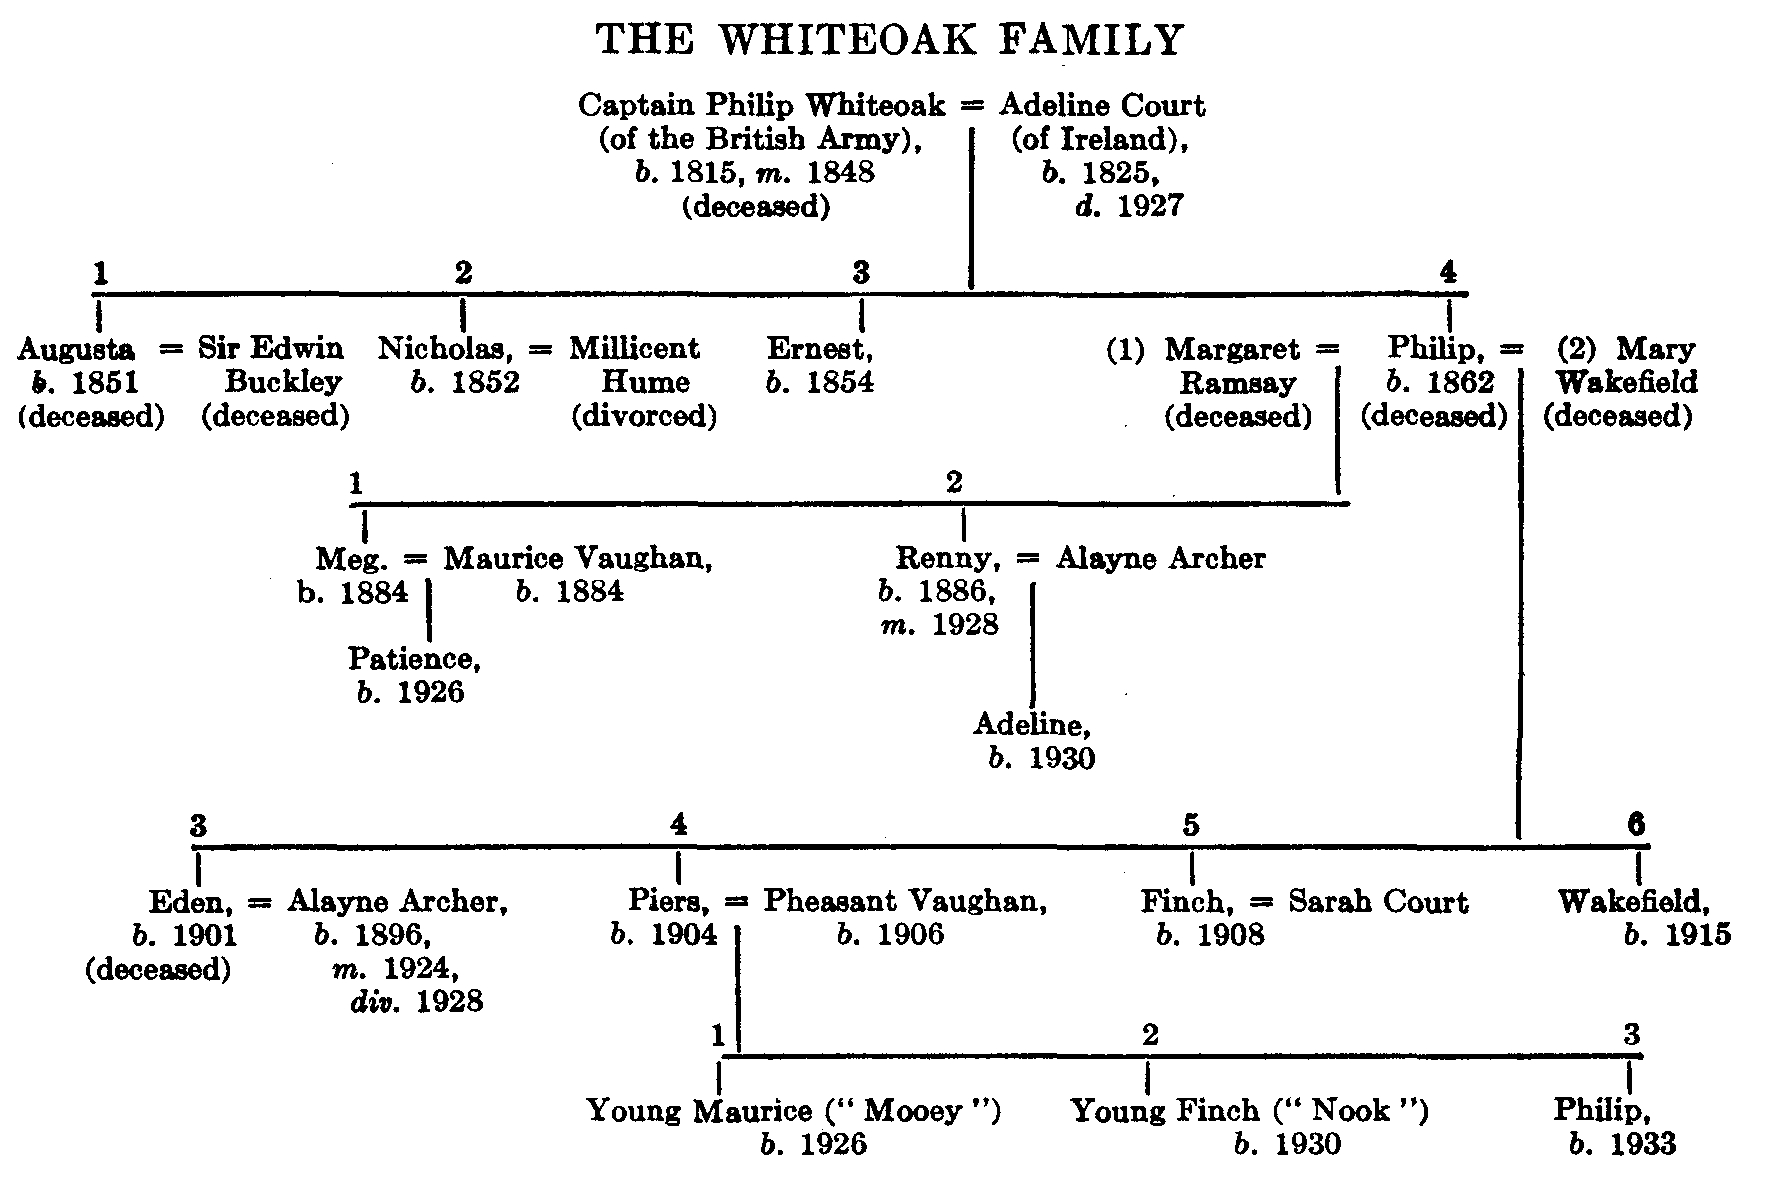 [Illustration: Whiteoaks Family Tree]